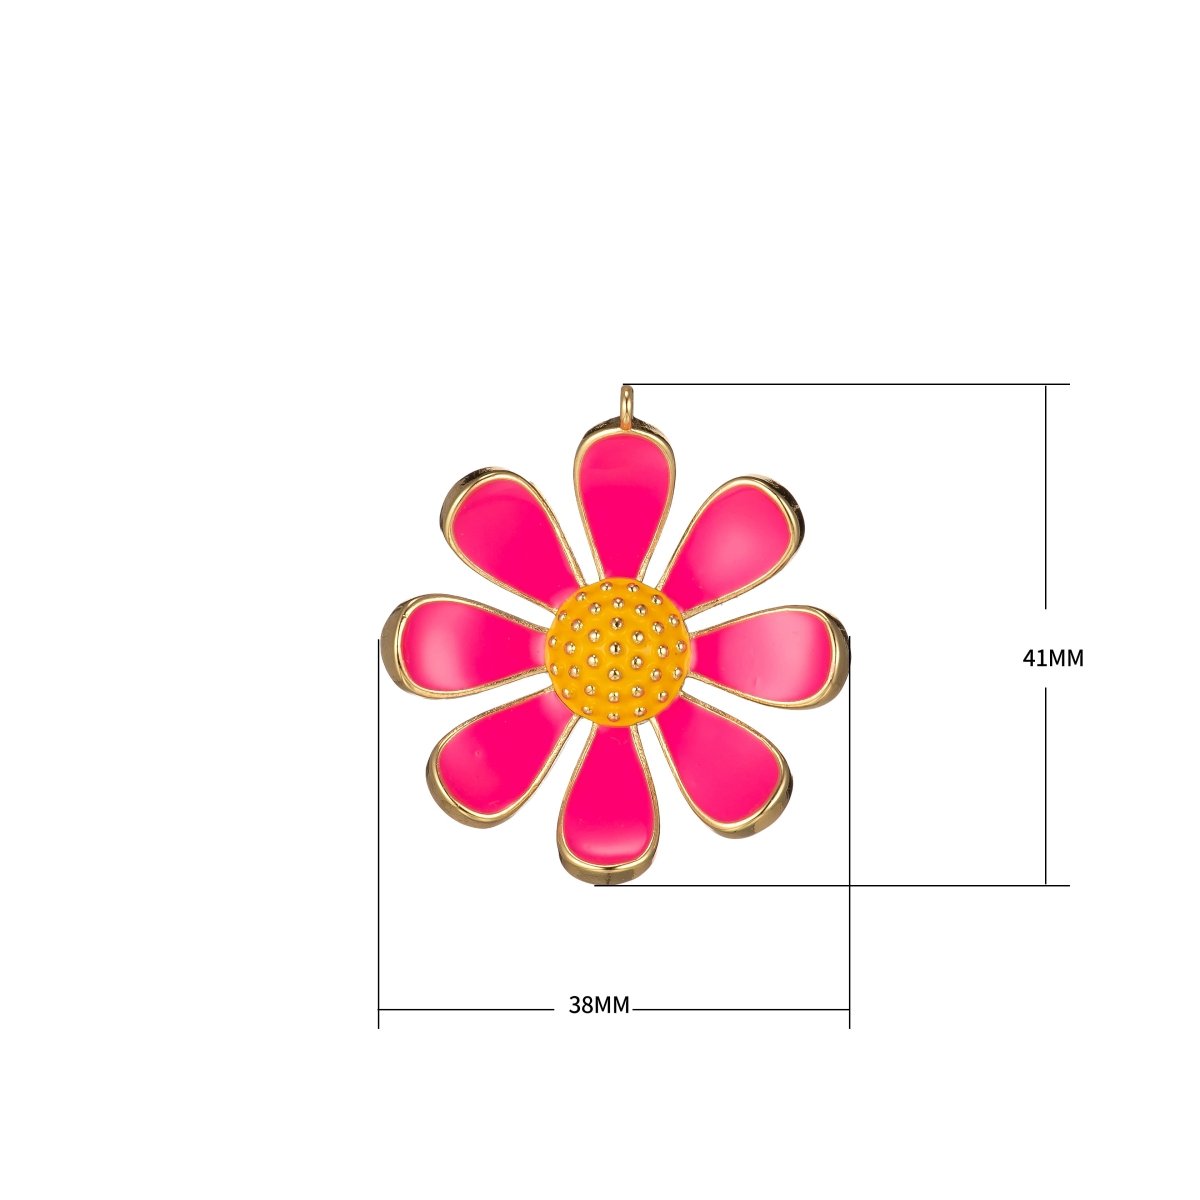 Small / Medium / Large Barbiecore Pink Jewelry Colorful Enamel Daisy Flower Charm Pendant M-220-M-243 - DLUXCA